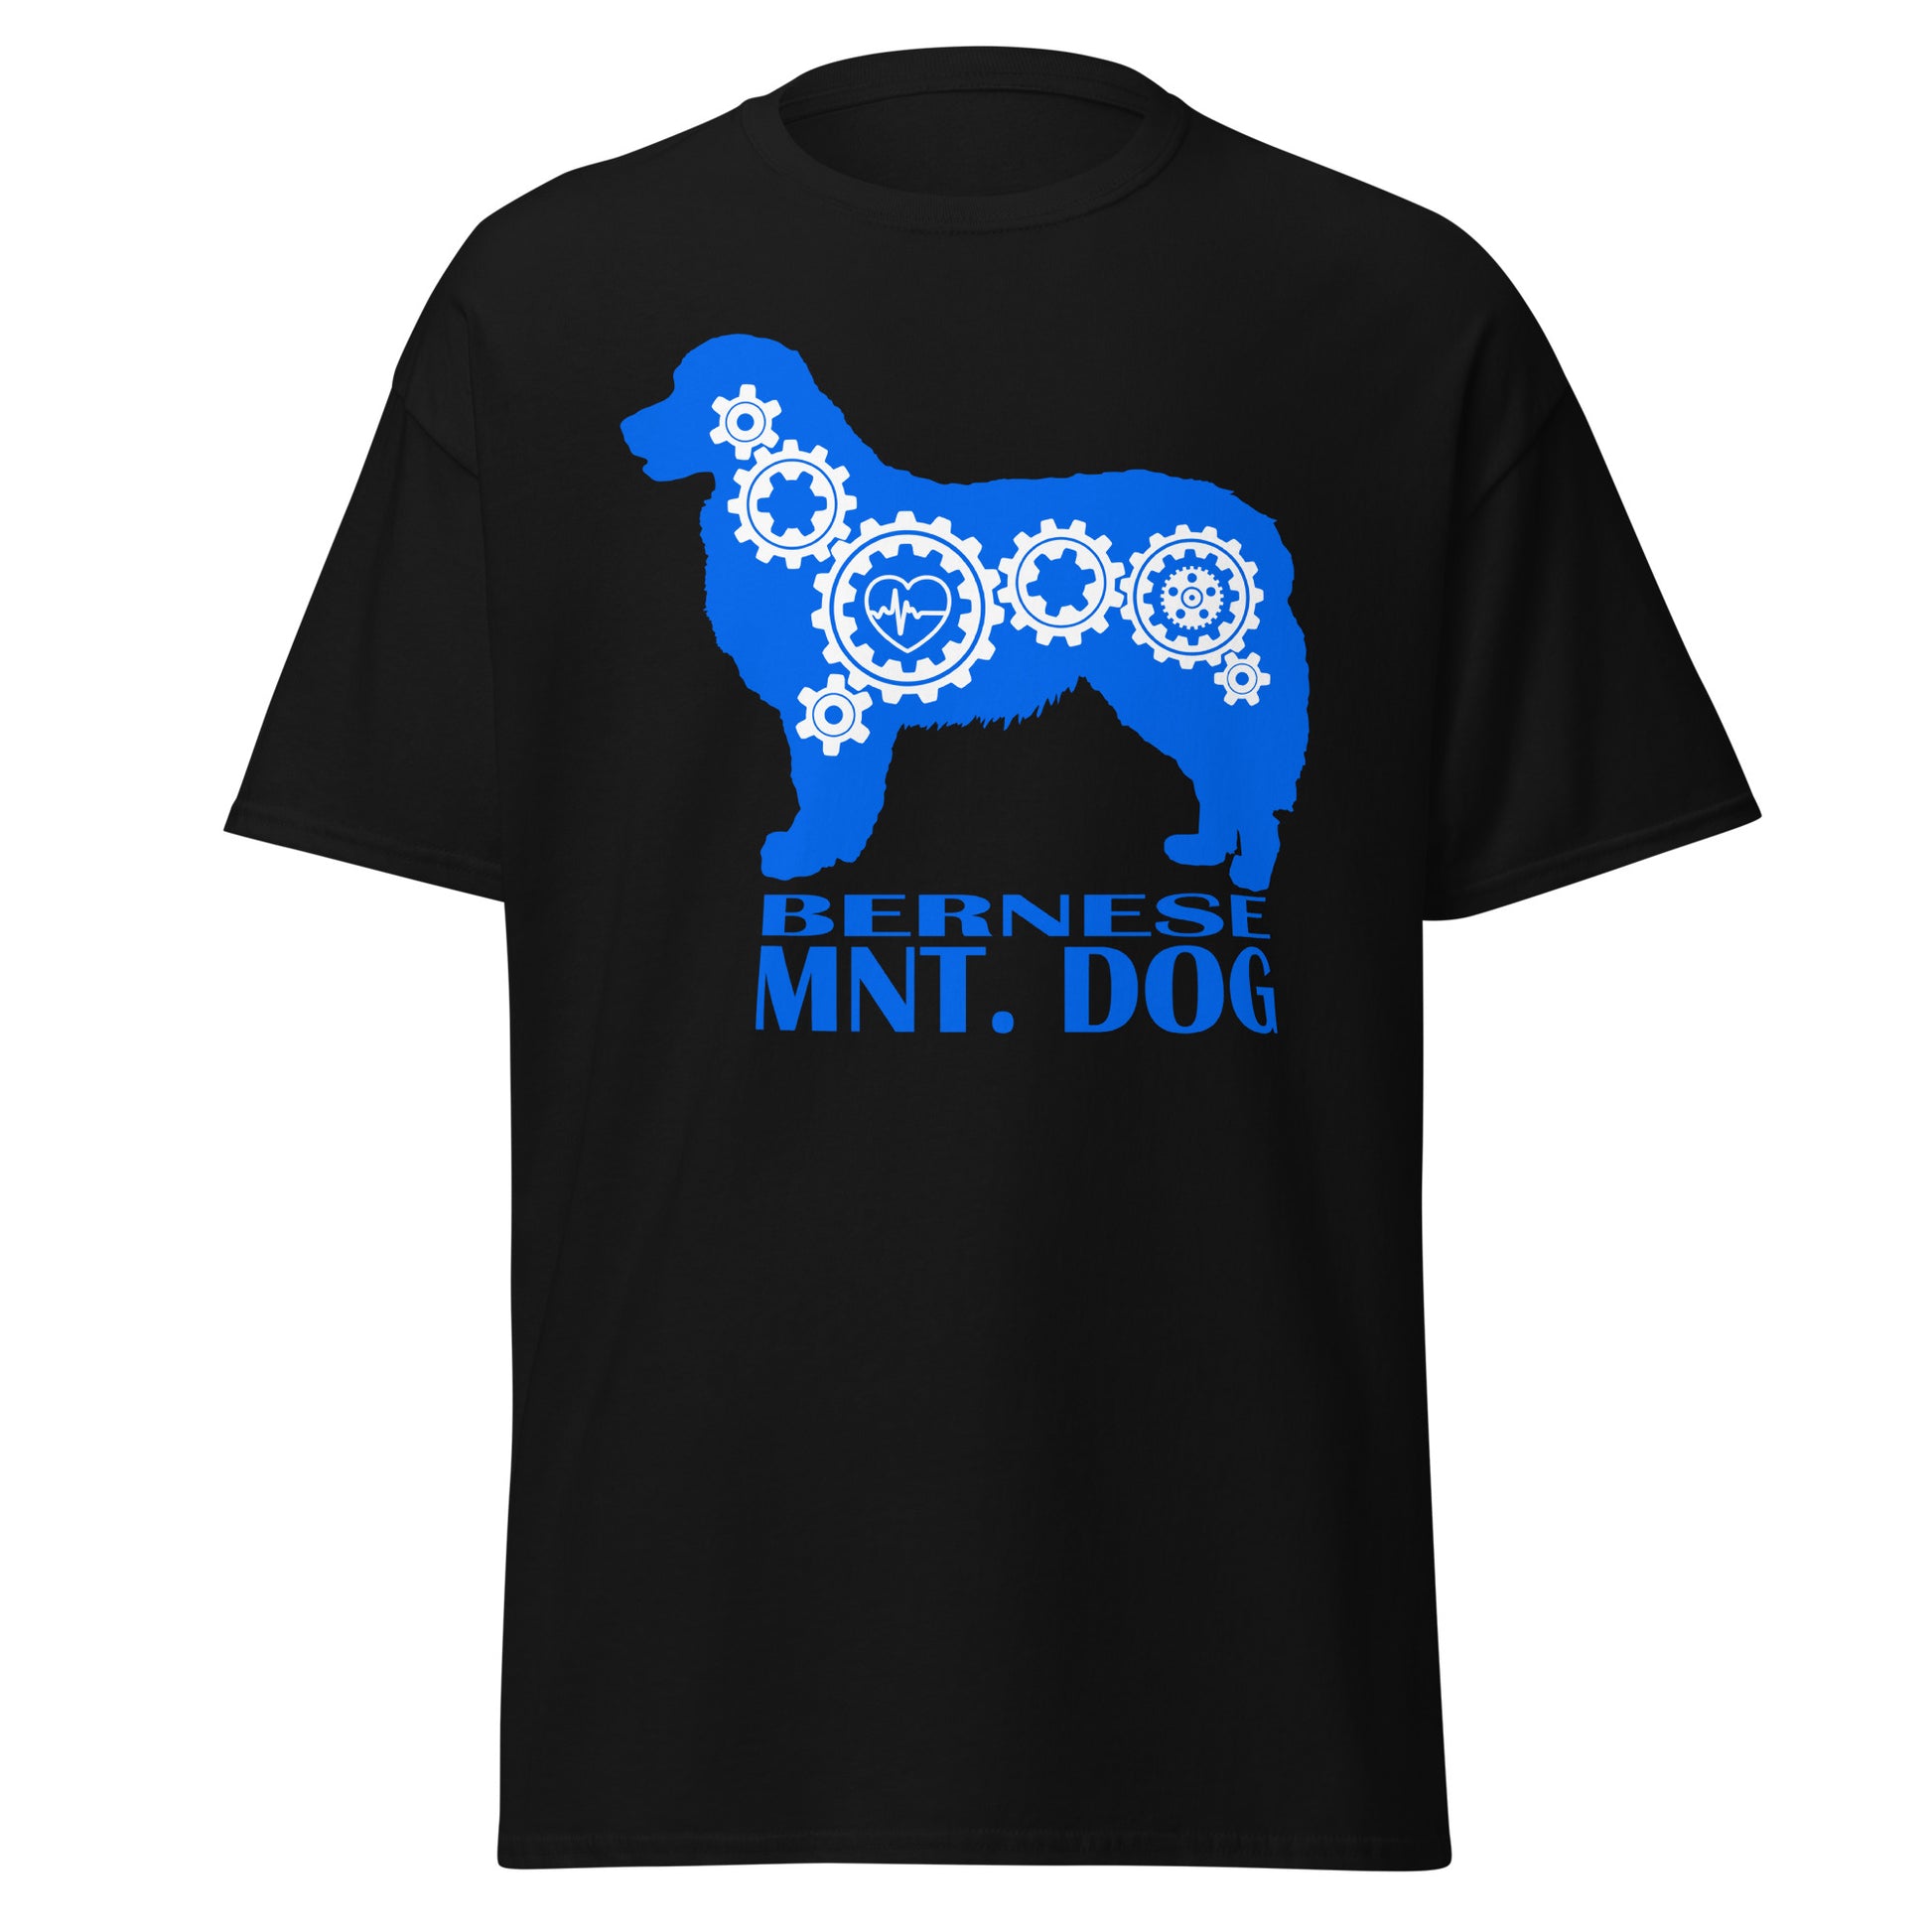 Bernese Mountain Dog Bionic men’s black t-shirt by Dog Artistry.